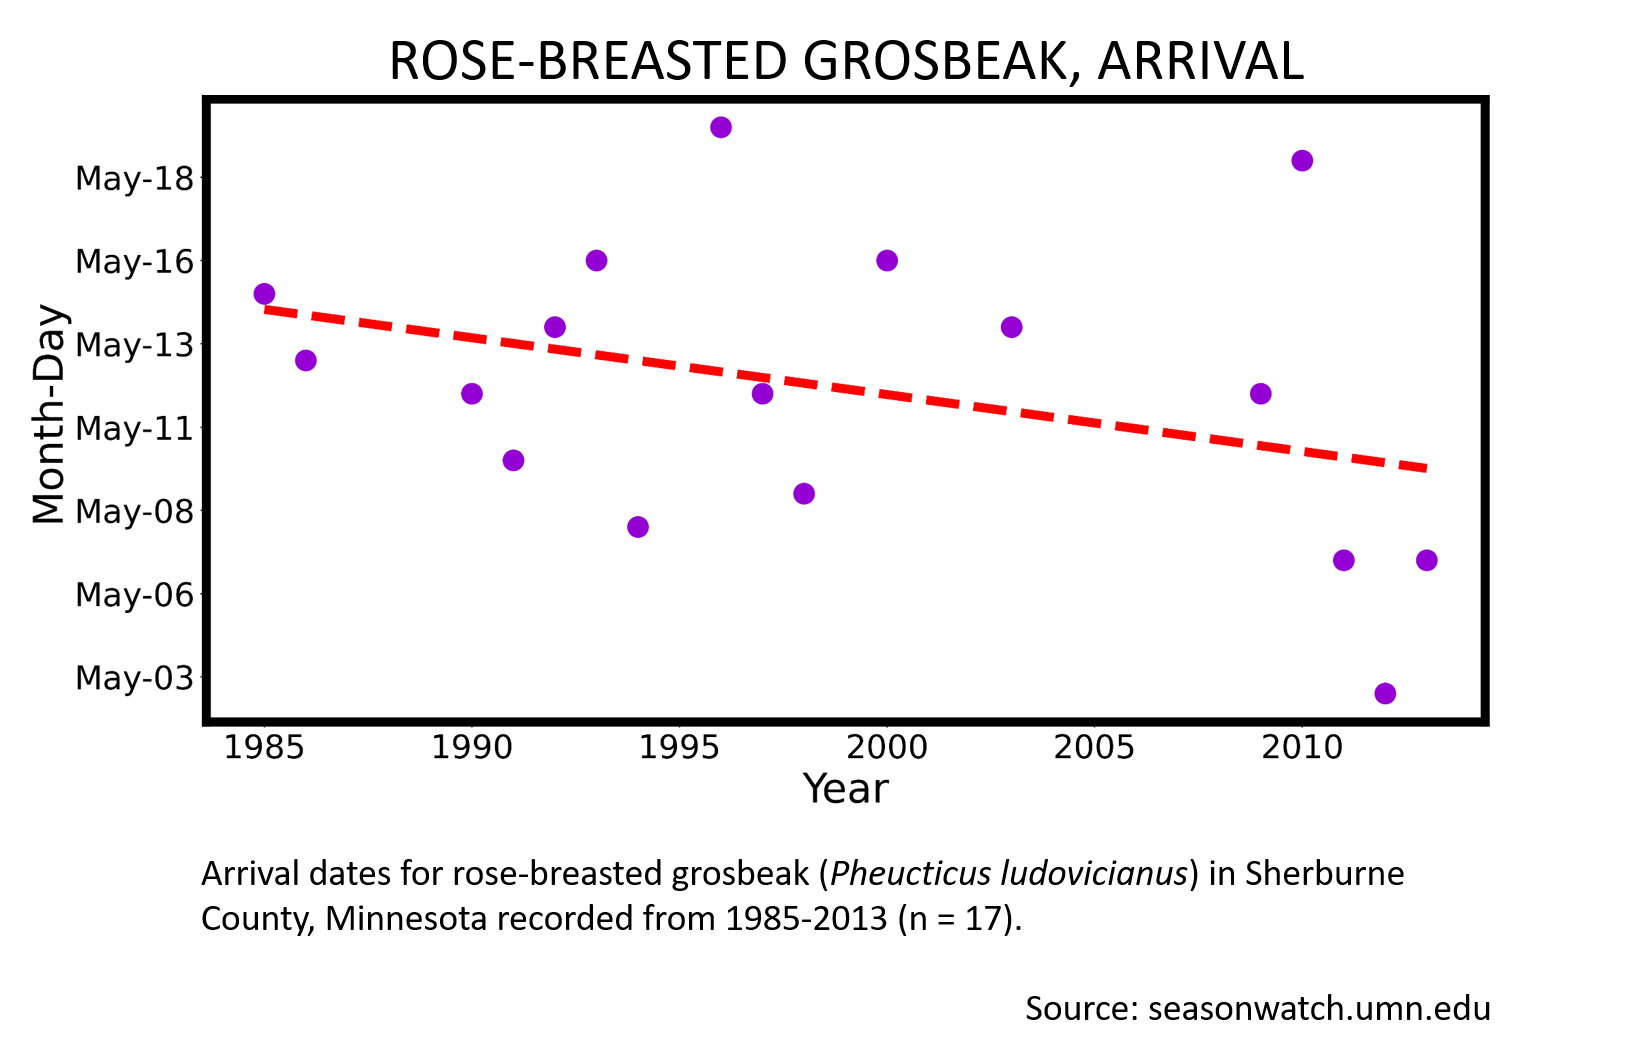 Scatterplot showing rose-breasted grosbeak phenology observations in Sherburne County, Minnesota